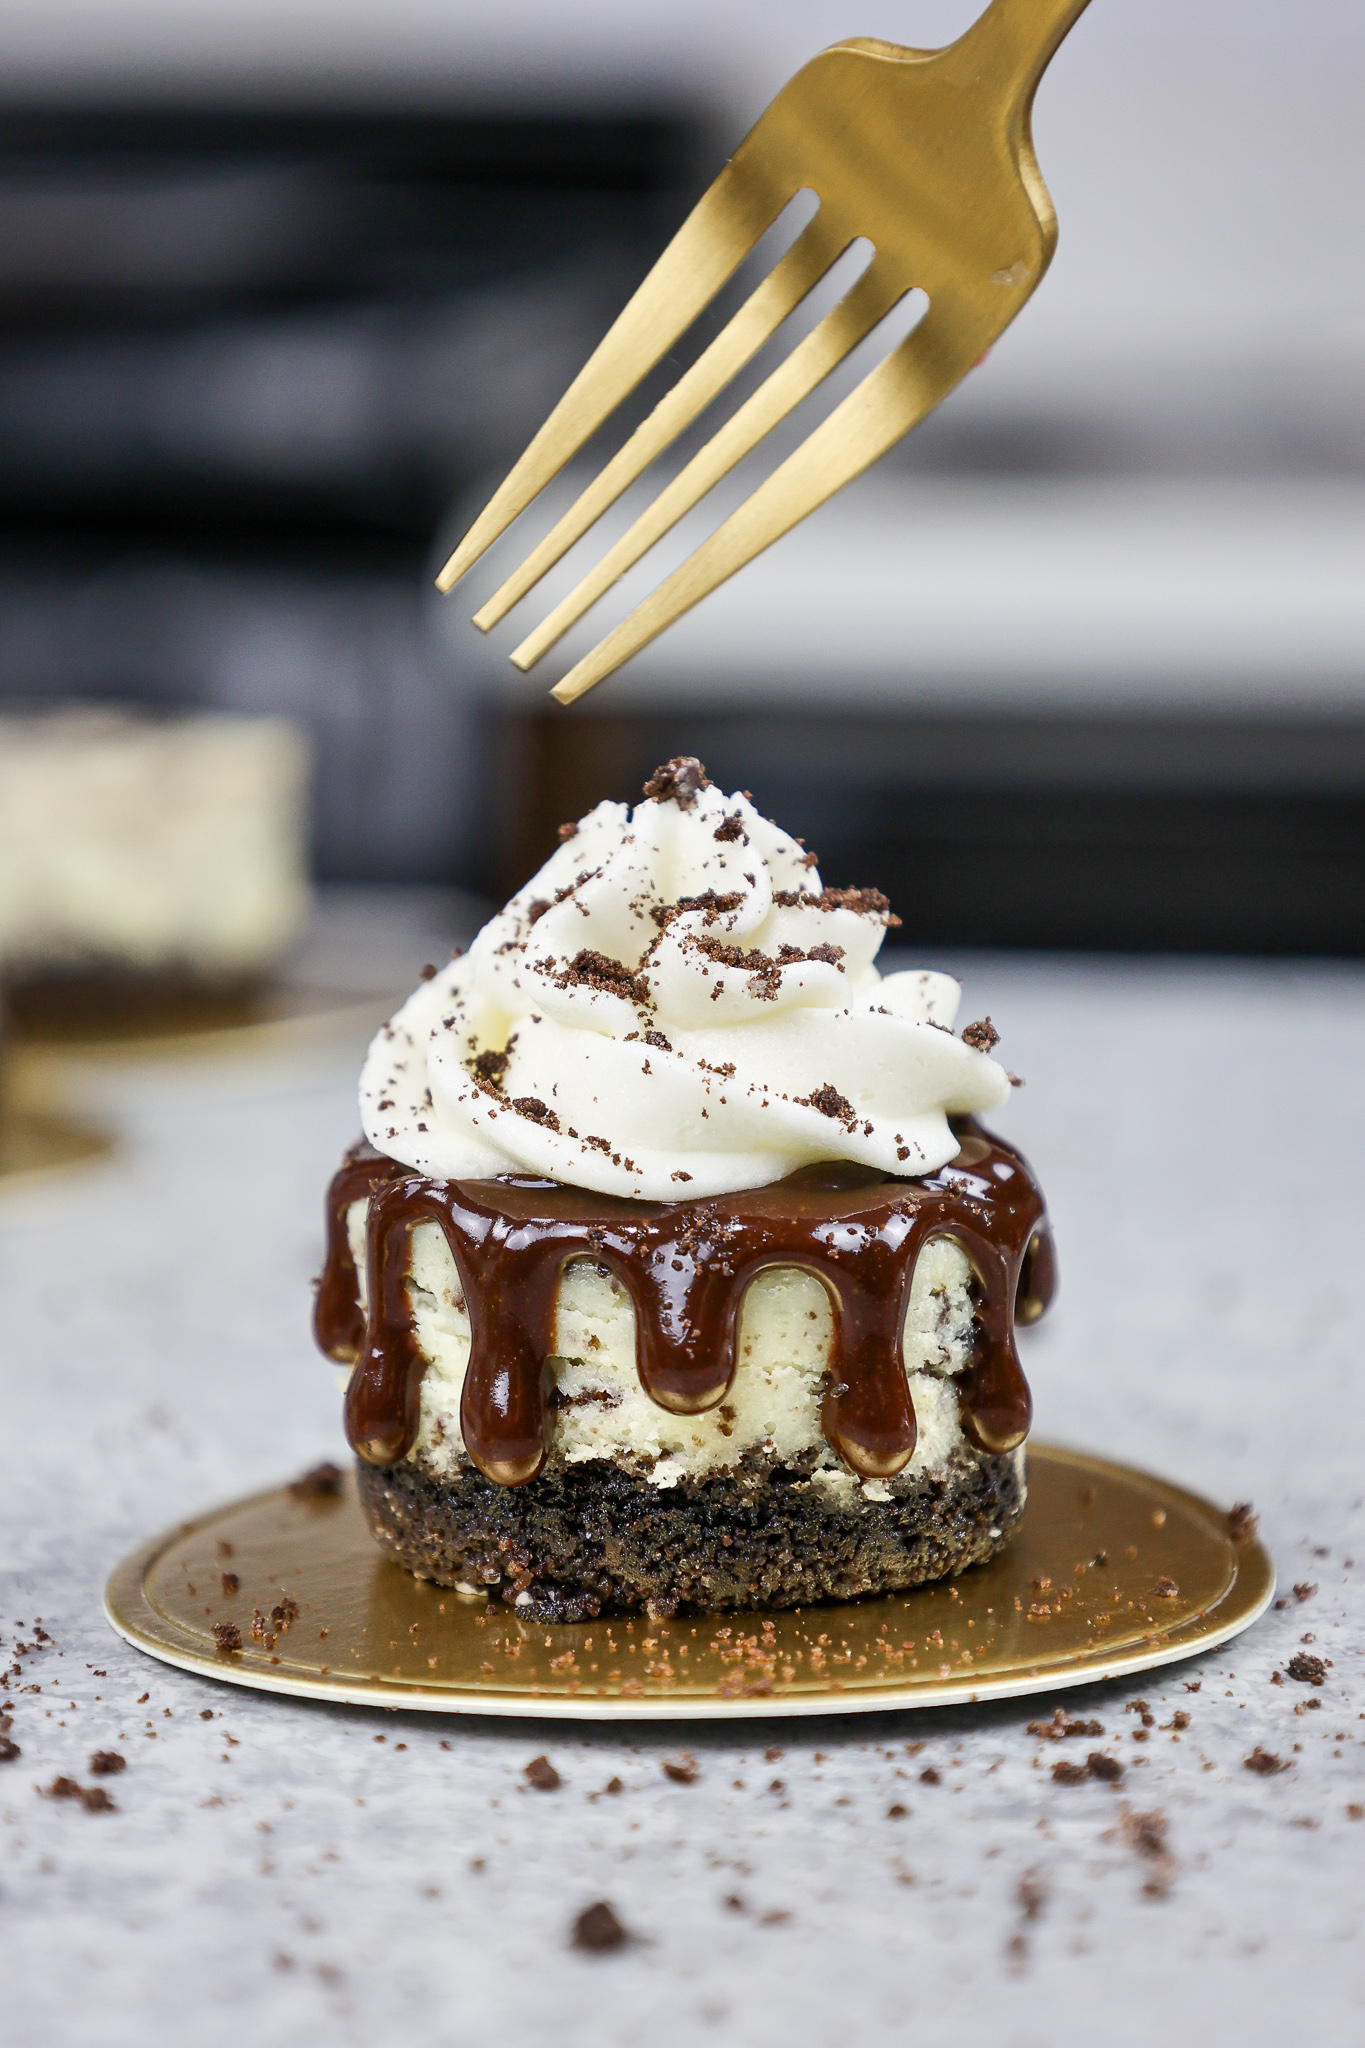 Mini Oreo Cheesecake - The Perfect Bite Sized Dessert